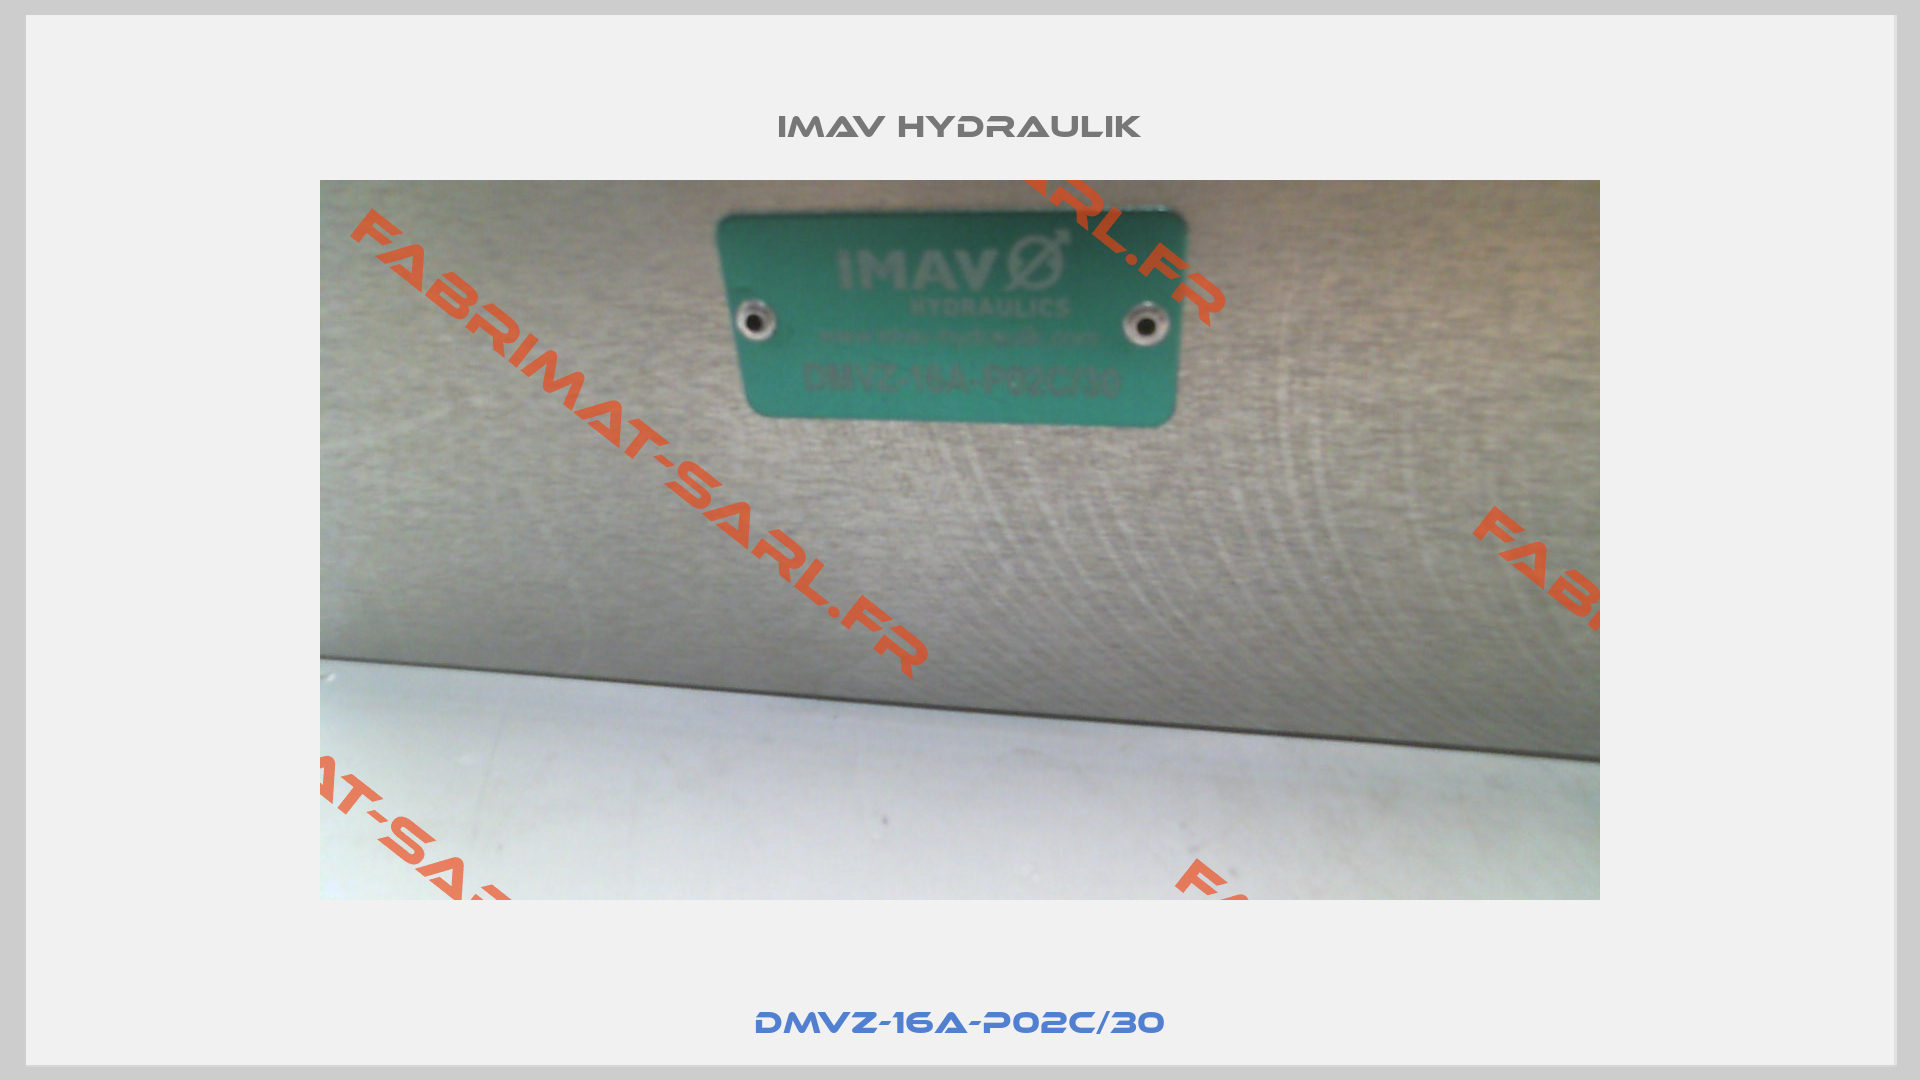 DMVZ-16A-P02C/30-1